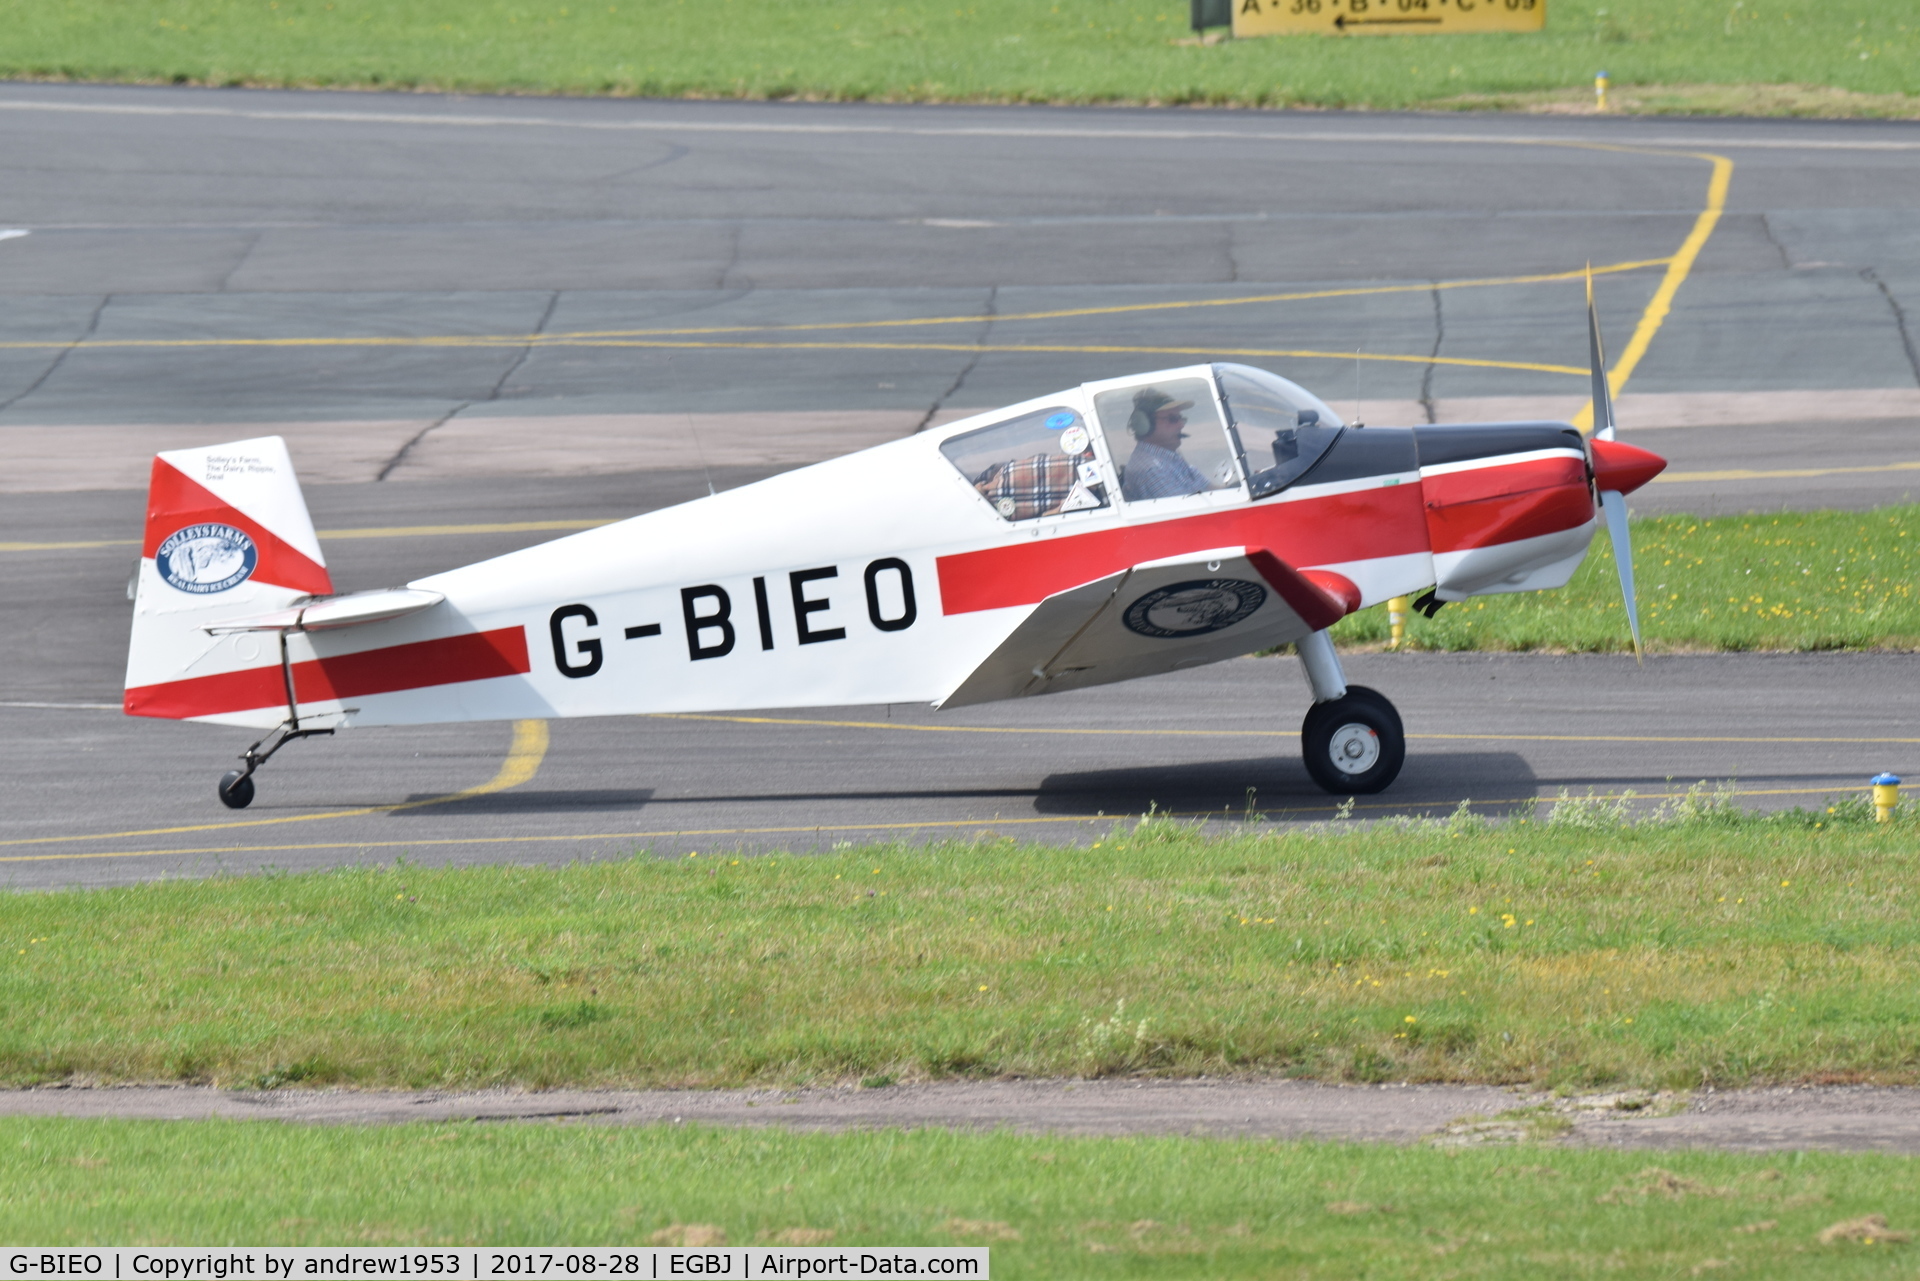 G-BIEO, 1965 Jodel D-112 Club C/N 1296, G-BIEO at Gloucestershire Airport.